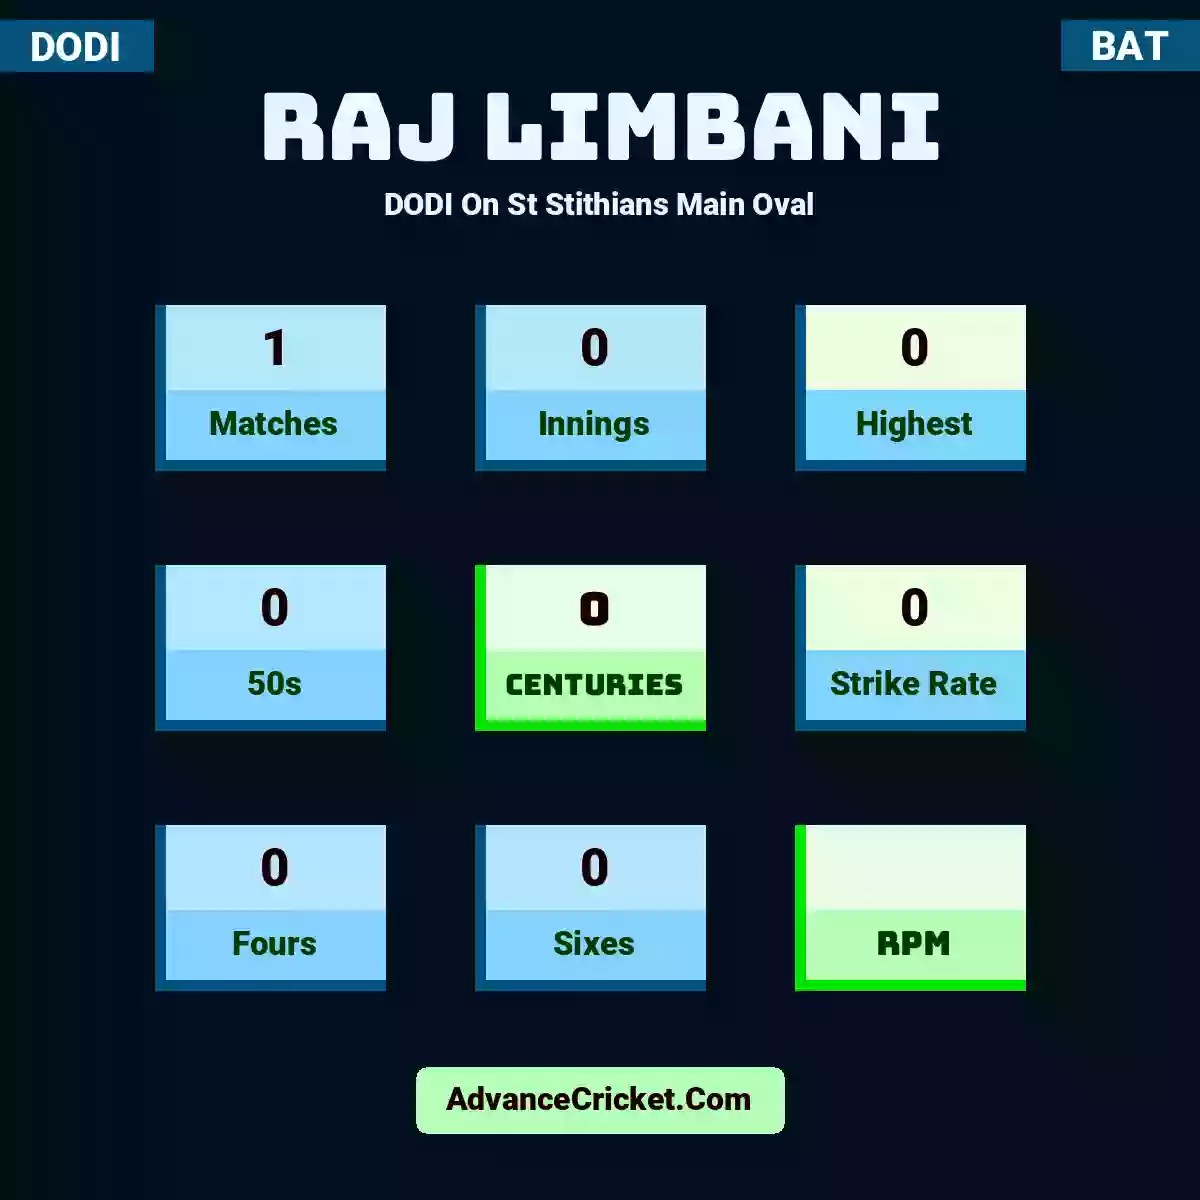 Raj Limbani DODI  On St Stithians Main Oval, Raj Limbani played 1 matches, scored 0 runs as highest, 0 half-centuries, and 0 centuries, with a strike rate of 0. R.Limbani hit 0 fours and 0 sixes.